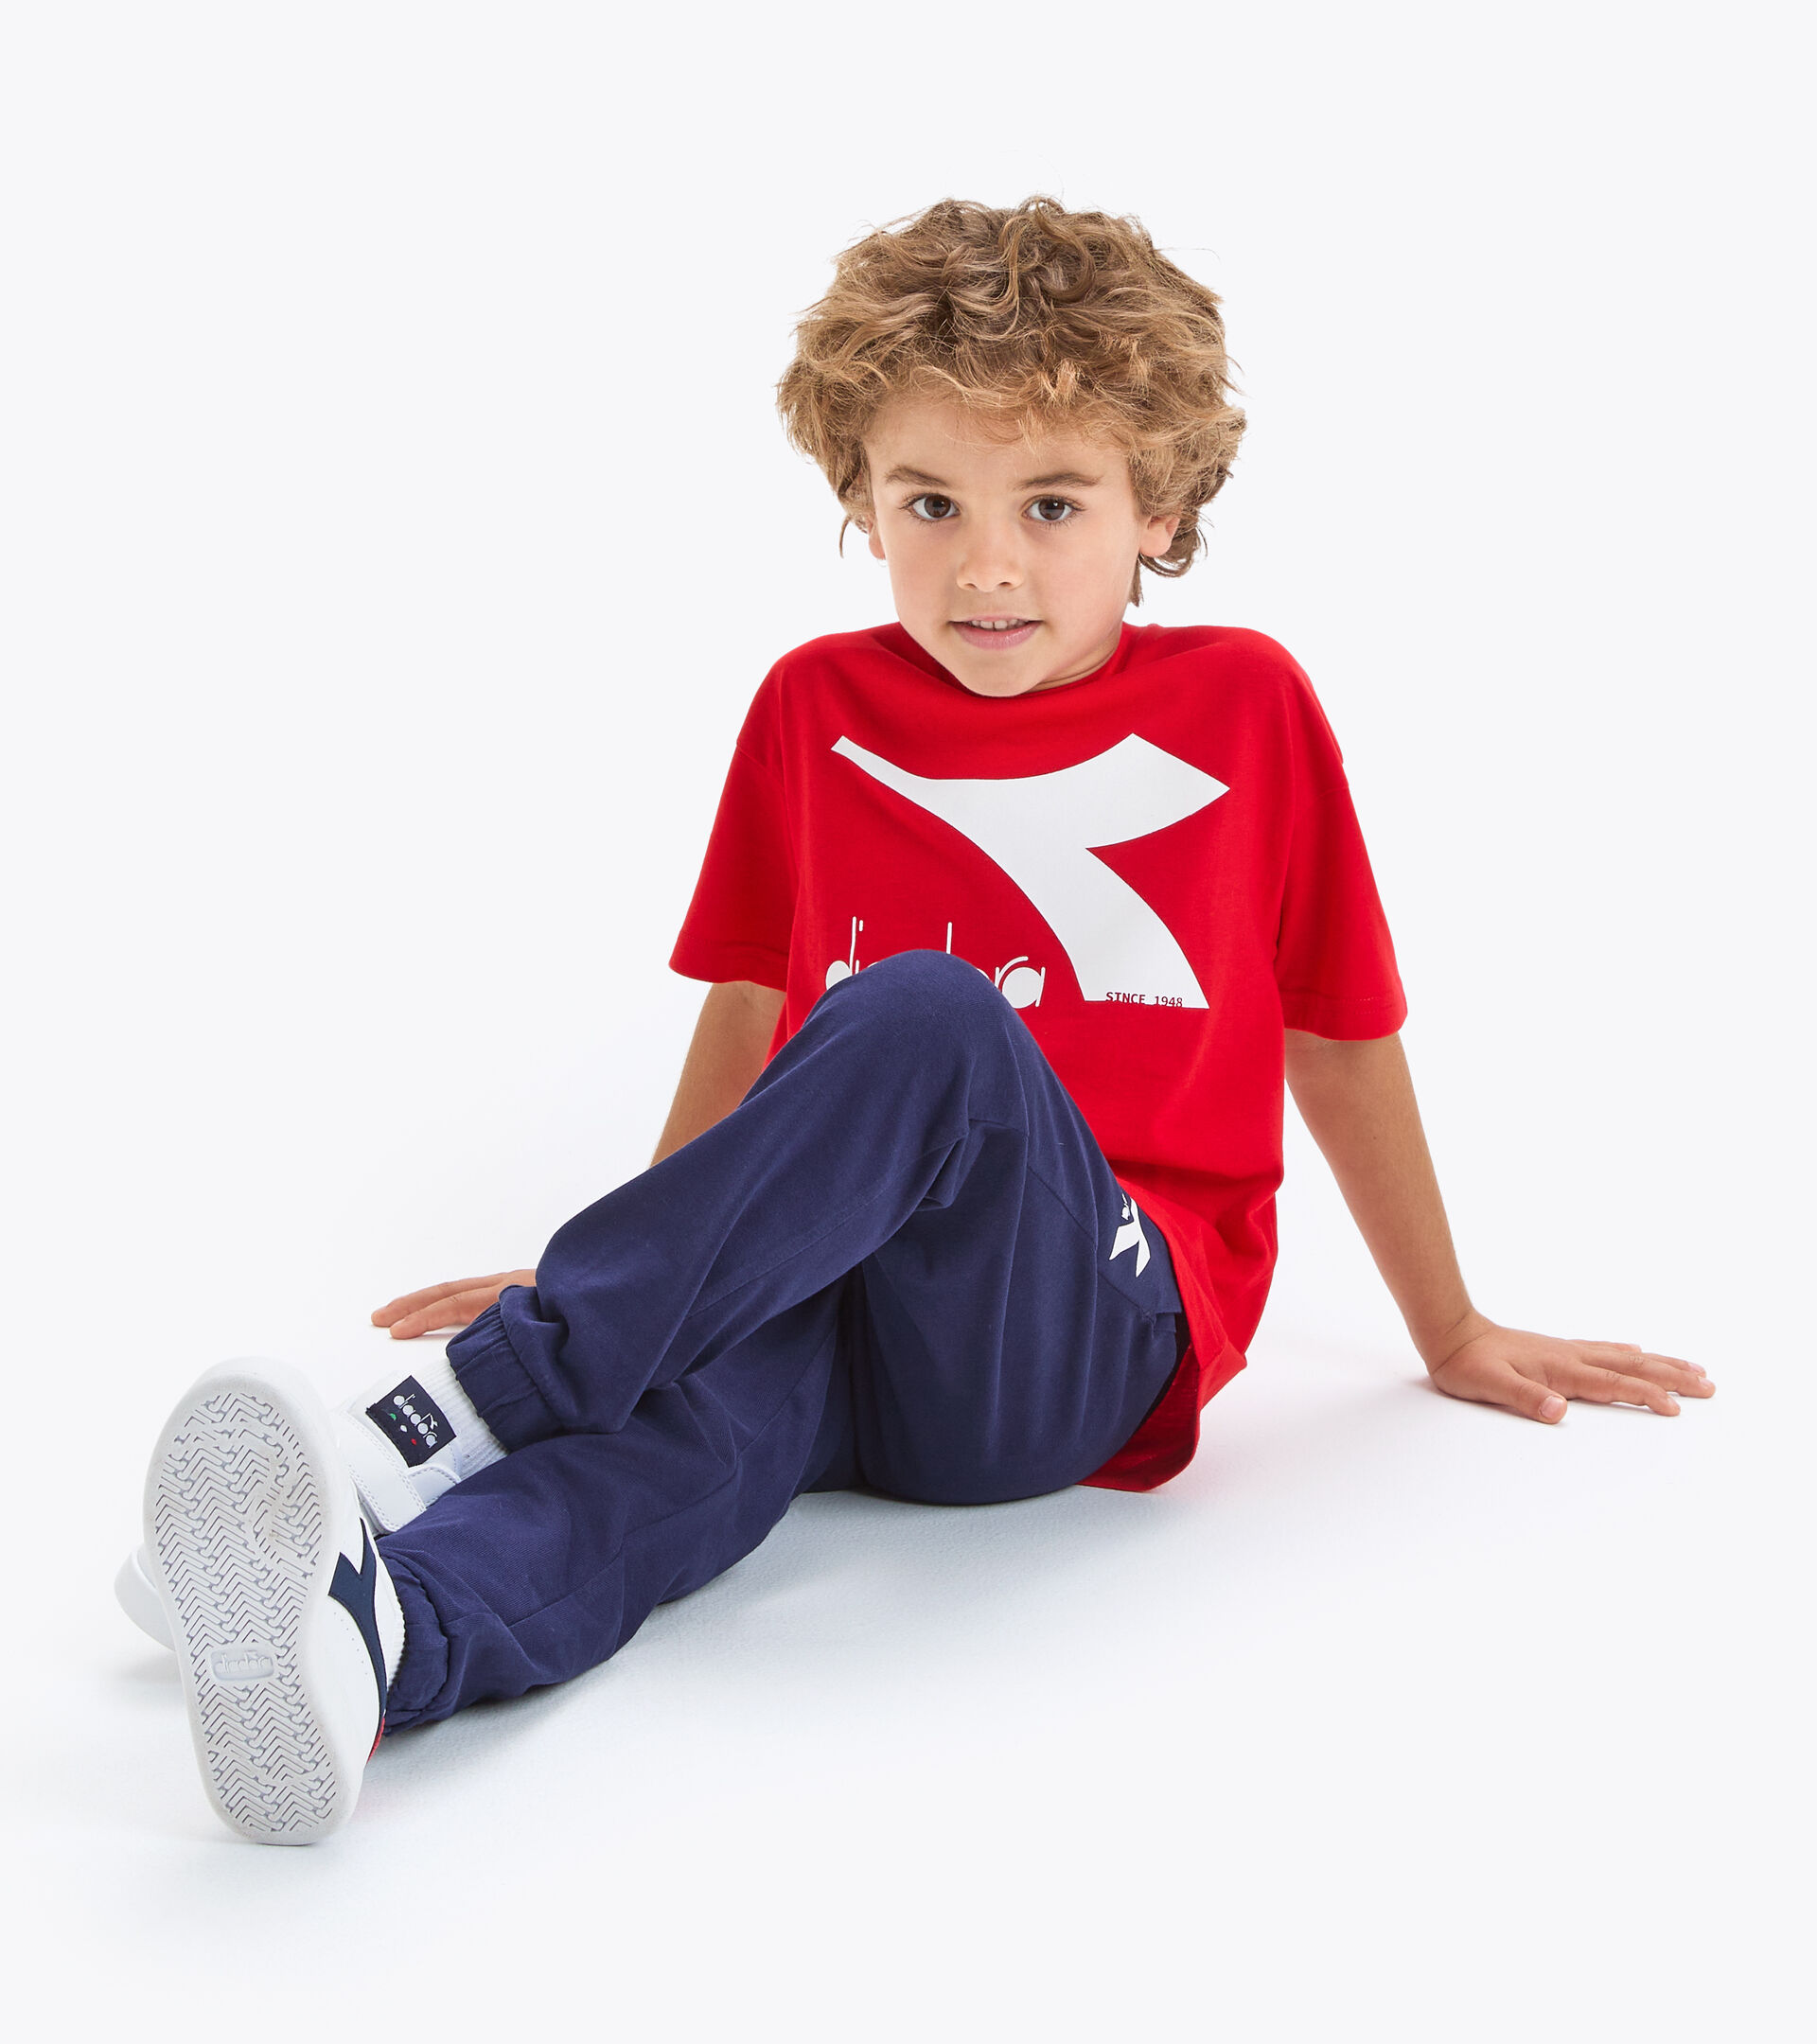 Camiseta deportiva - Niños y Niñas
 JU.T-SHIRT SS BL ROJO ALTO RIESGO - Diadora